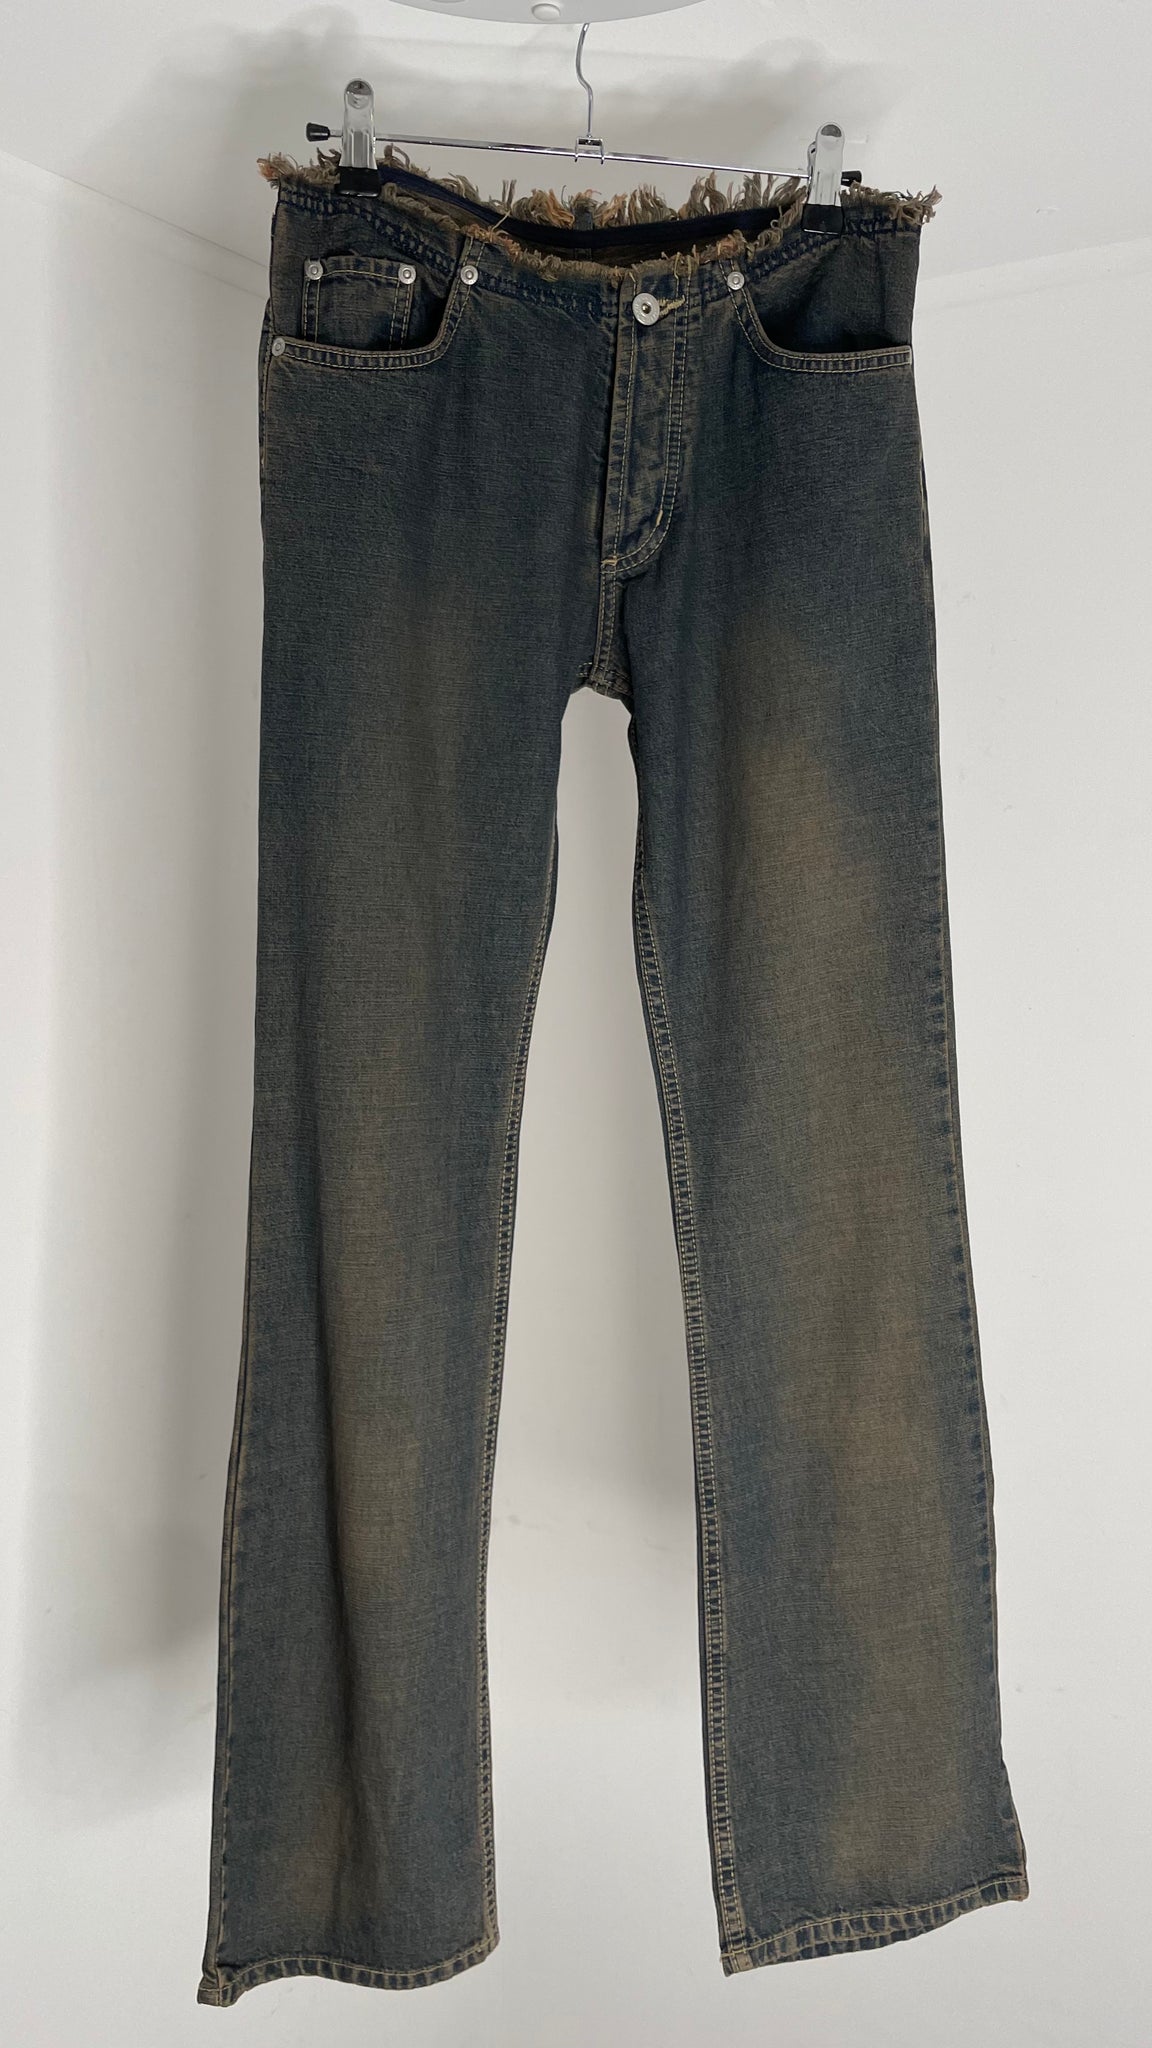 Fringe Flare Jeans 27x32